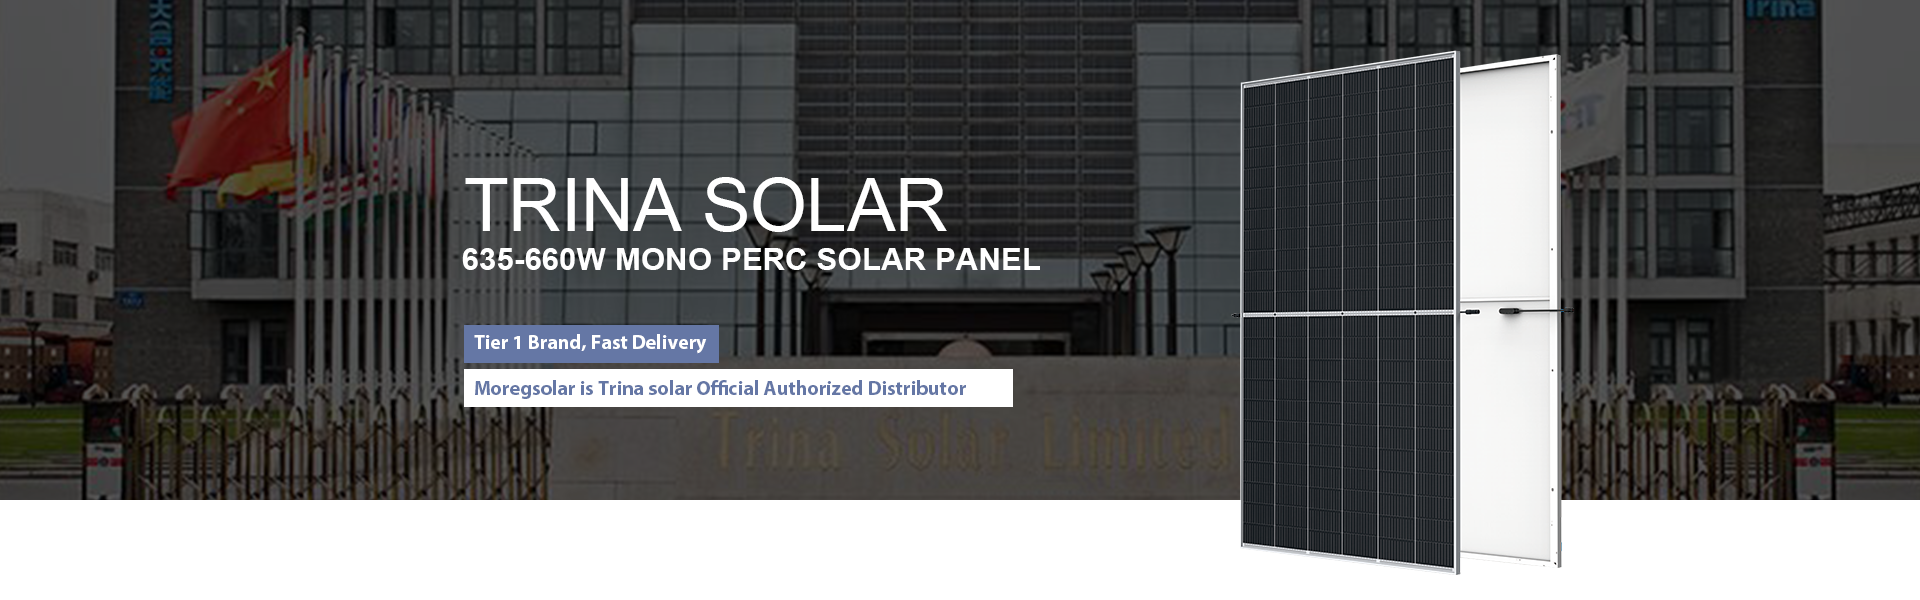 Trina solar vertex 640w 650w 660w pv solar panel